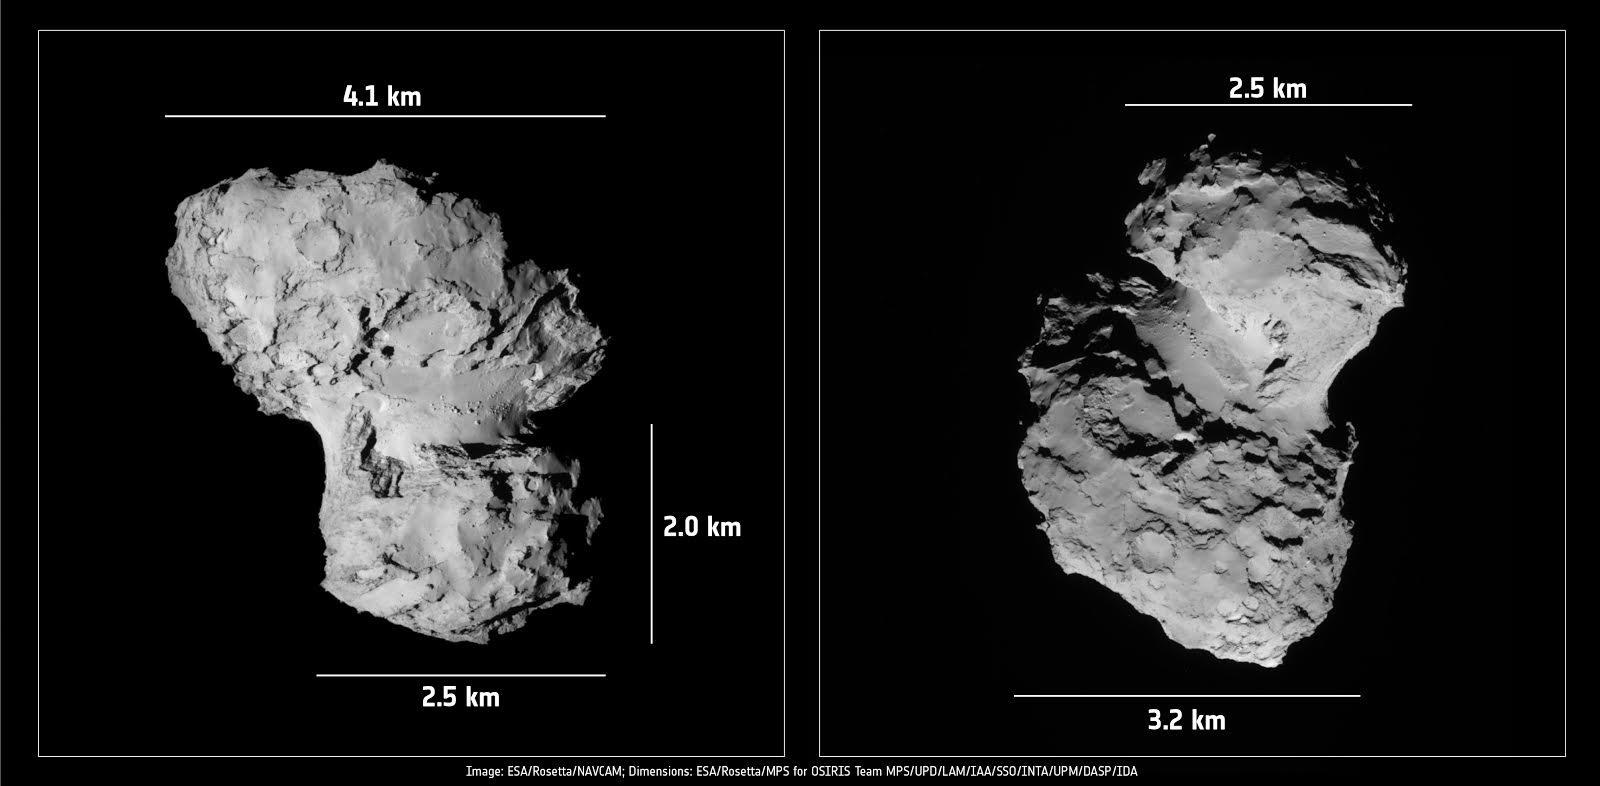 Measuring Comet 67P/Churyumov-Gerasimenko